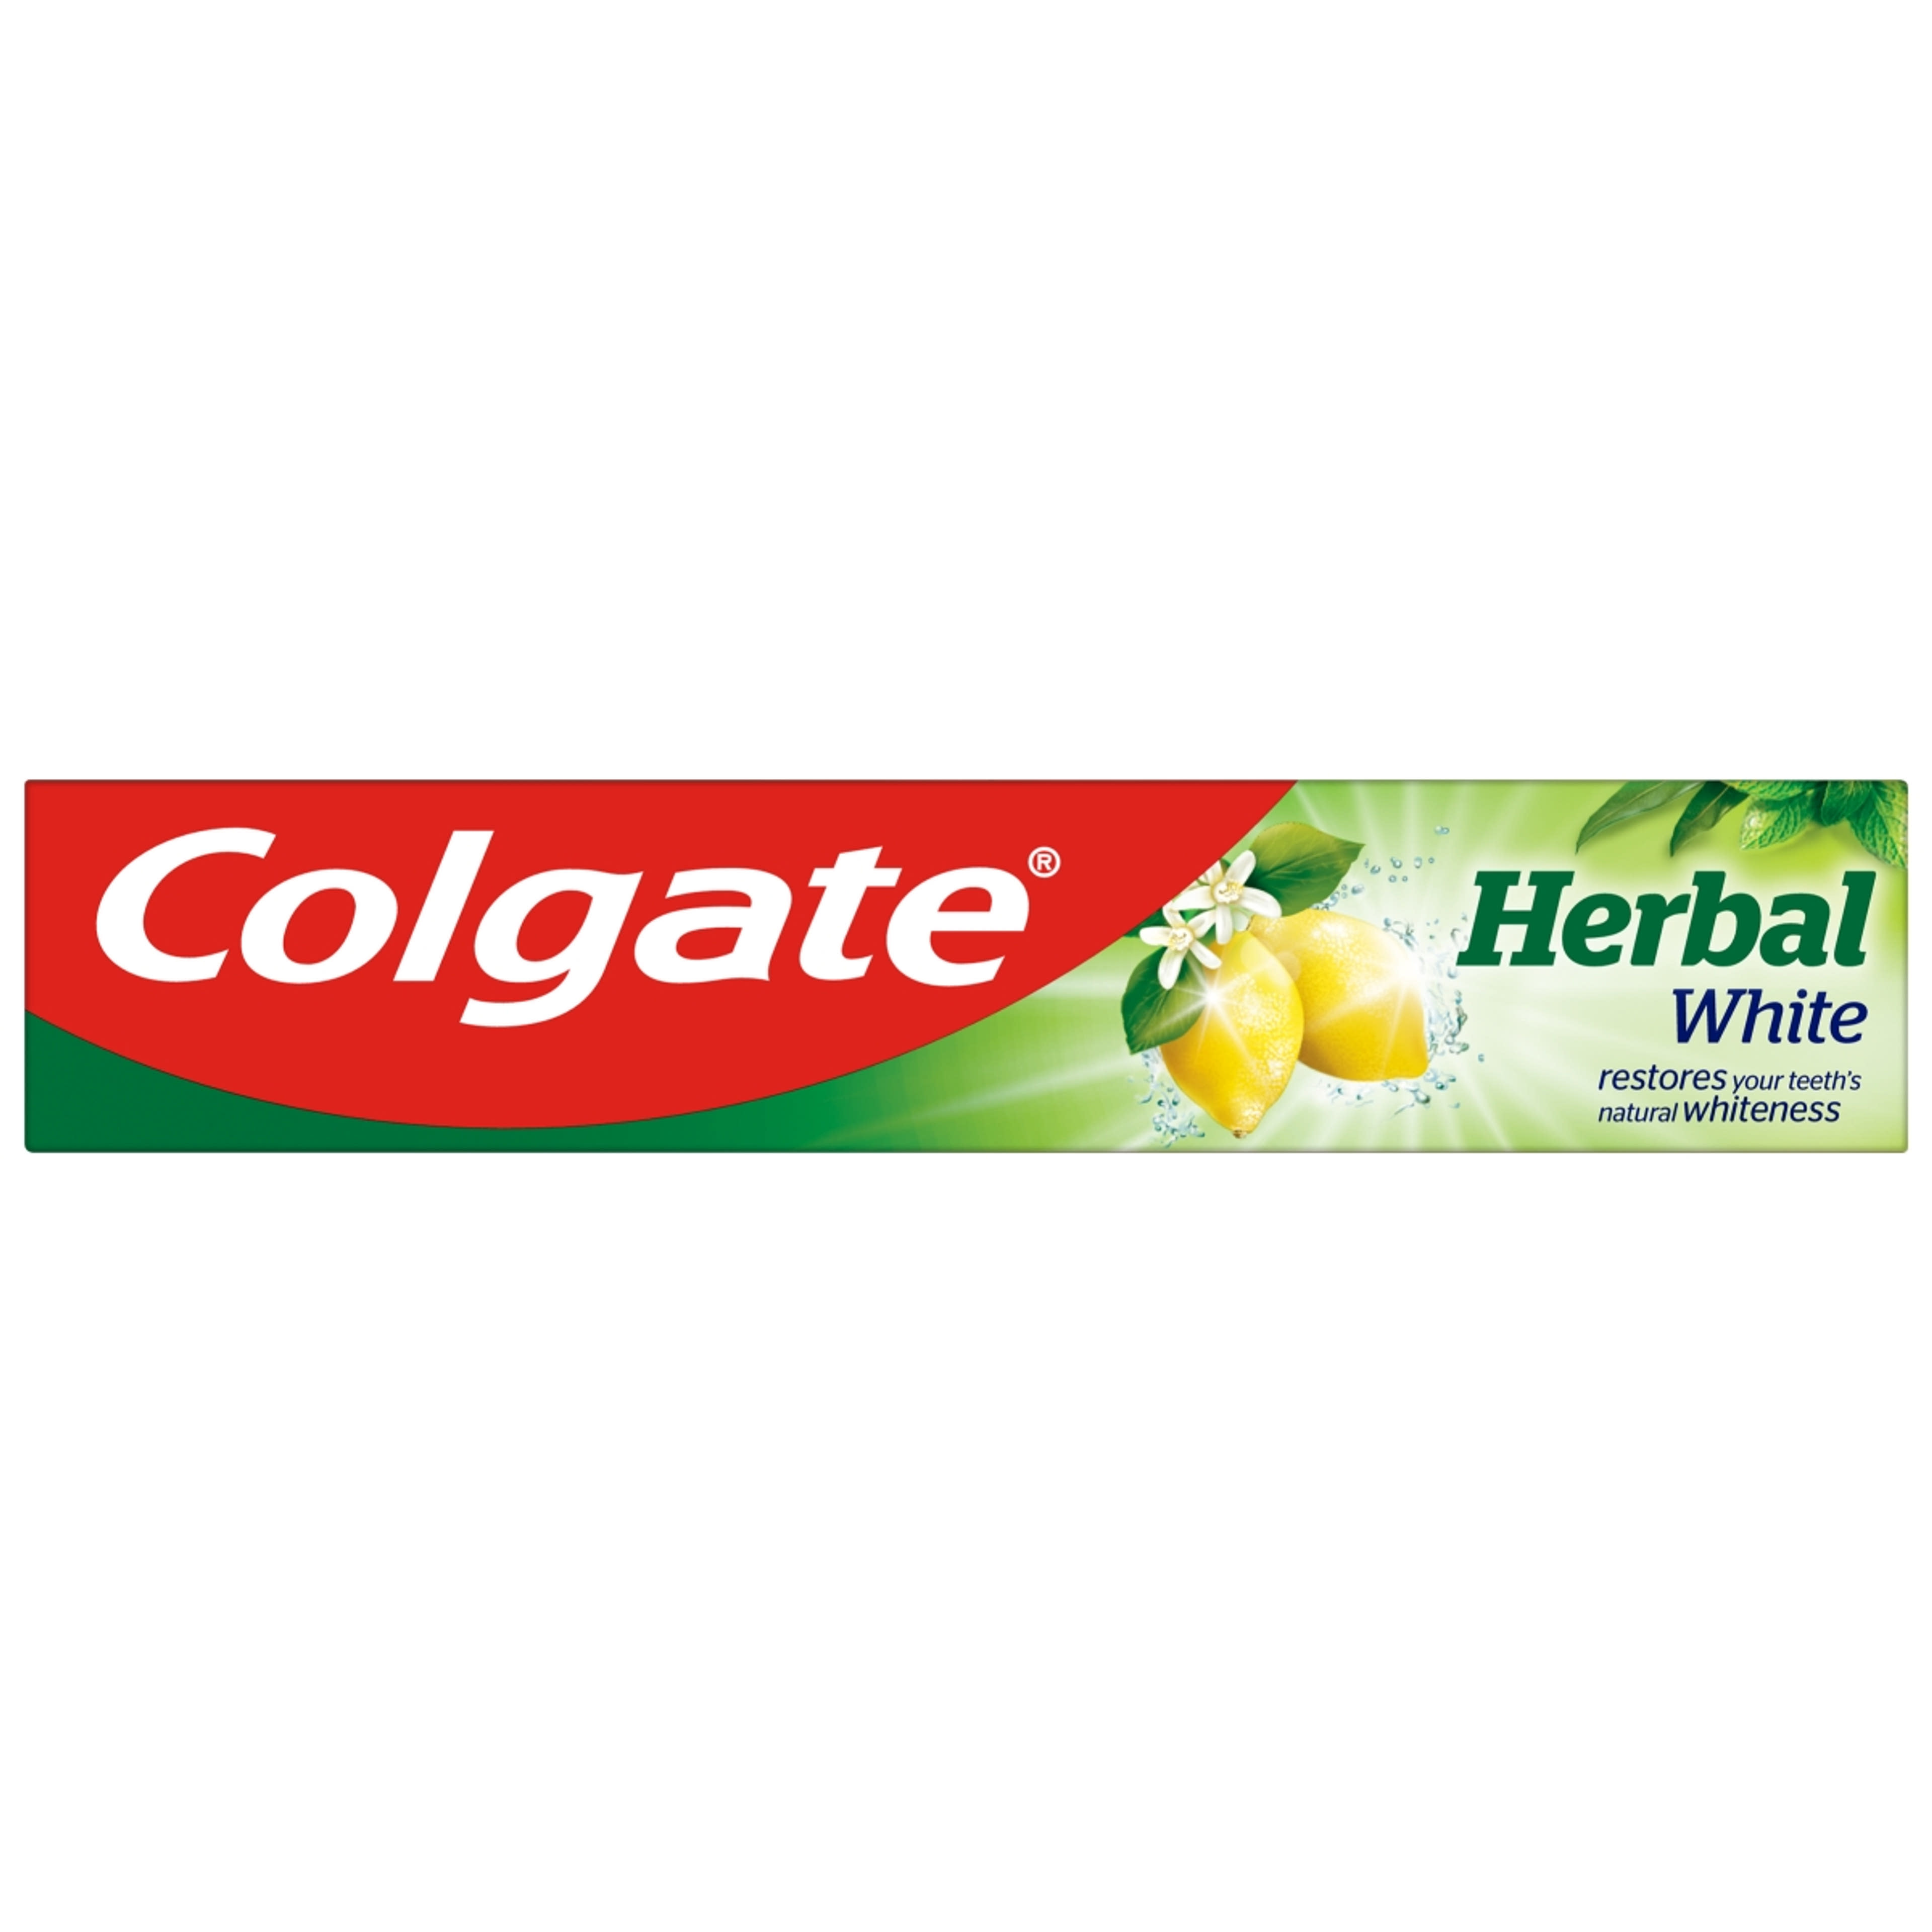 Colgate Herbal White fogfehérítő fogkrém - 75 ml